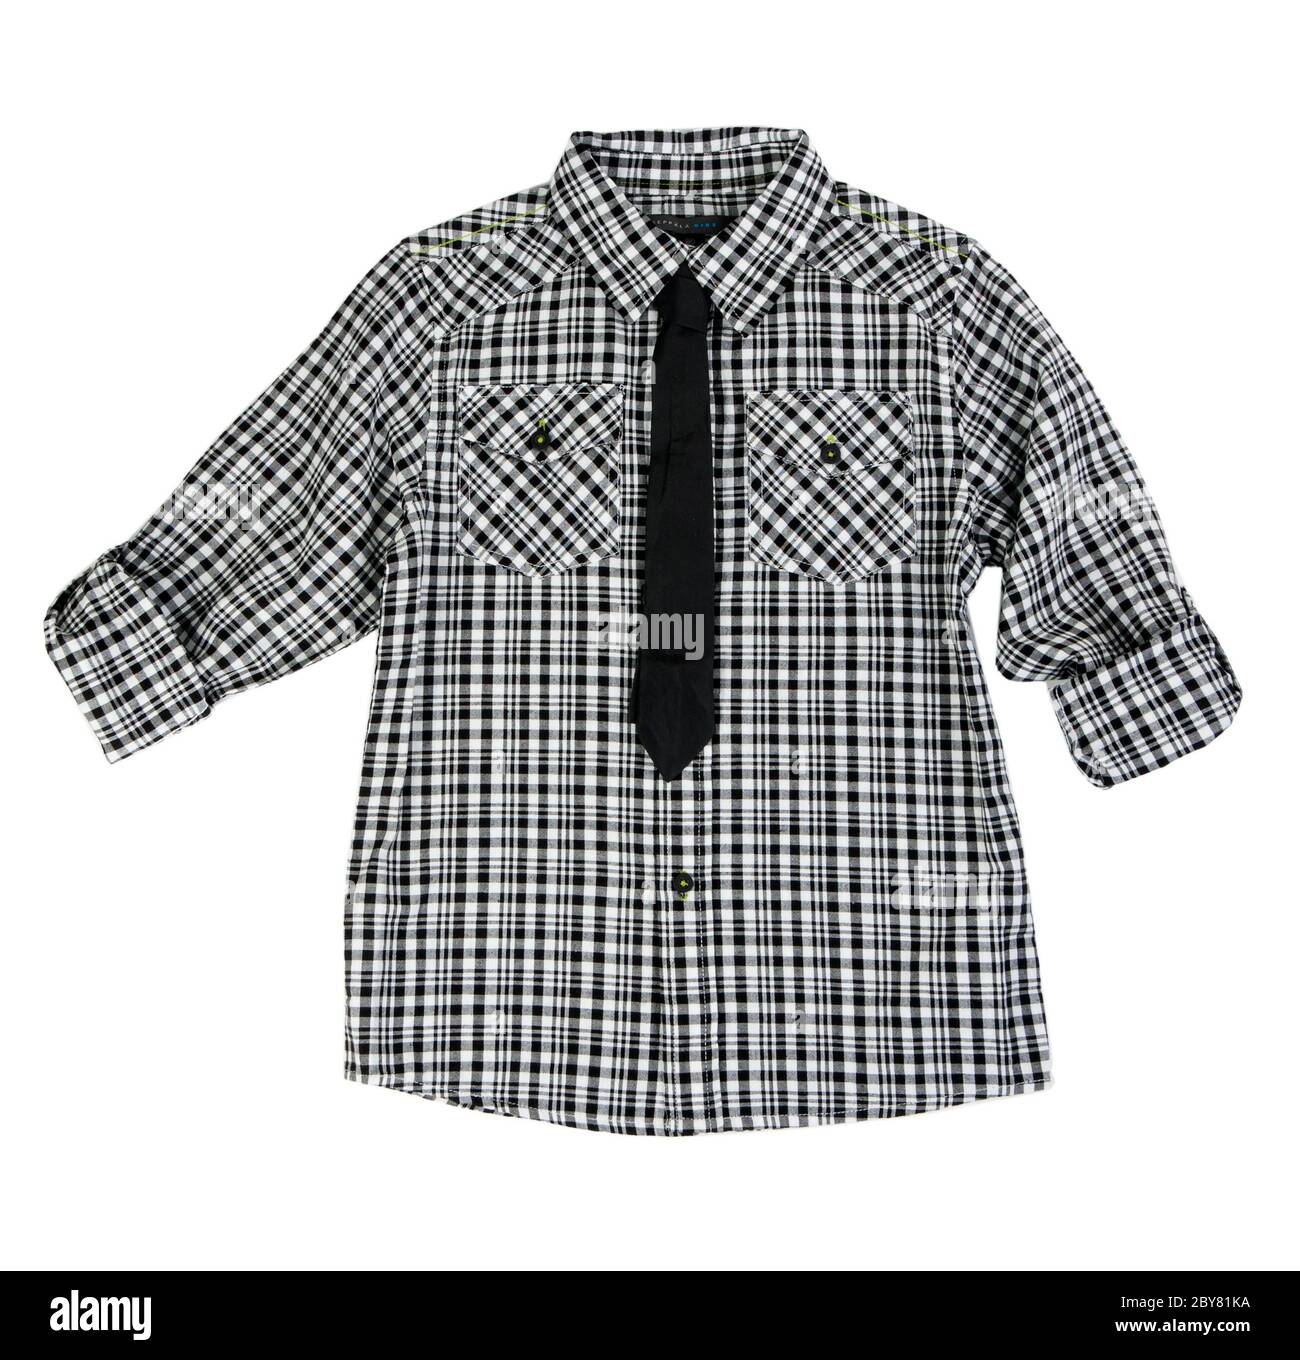 Checkered shirt and tie Stock Photo